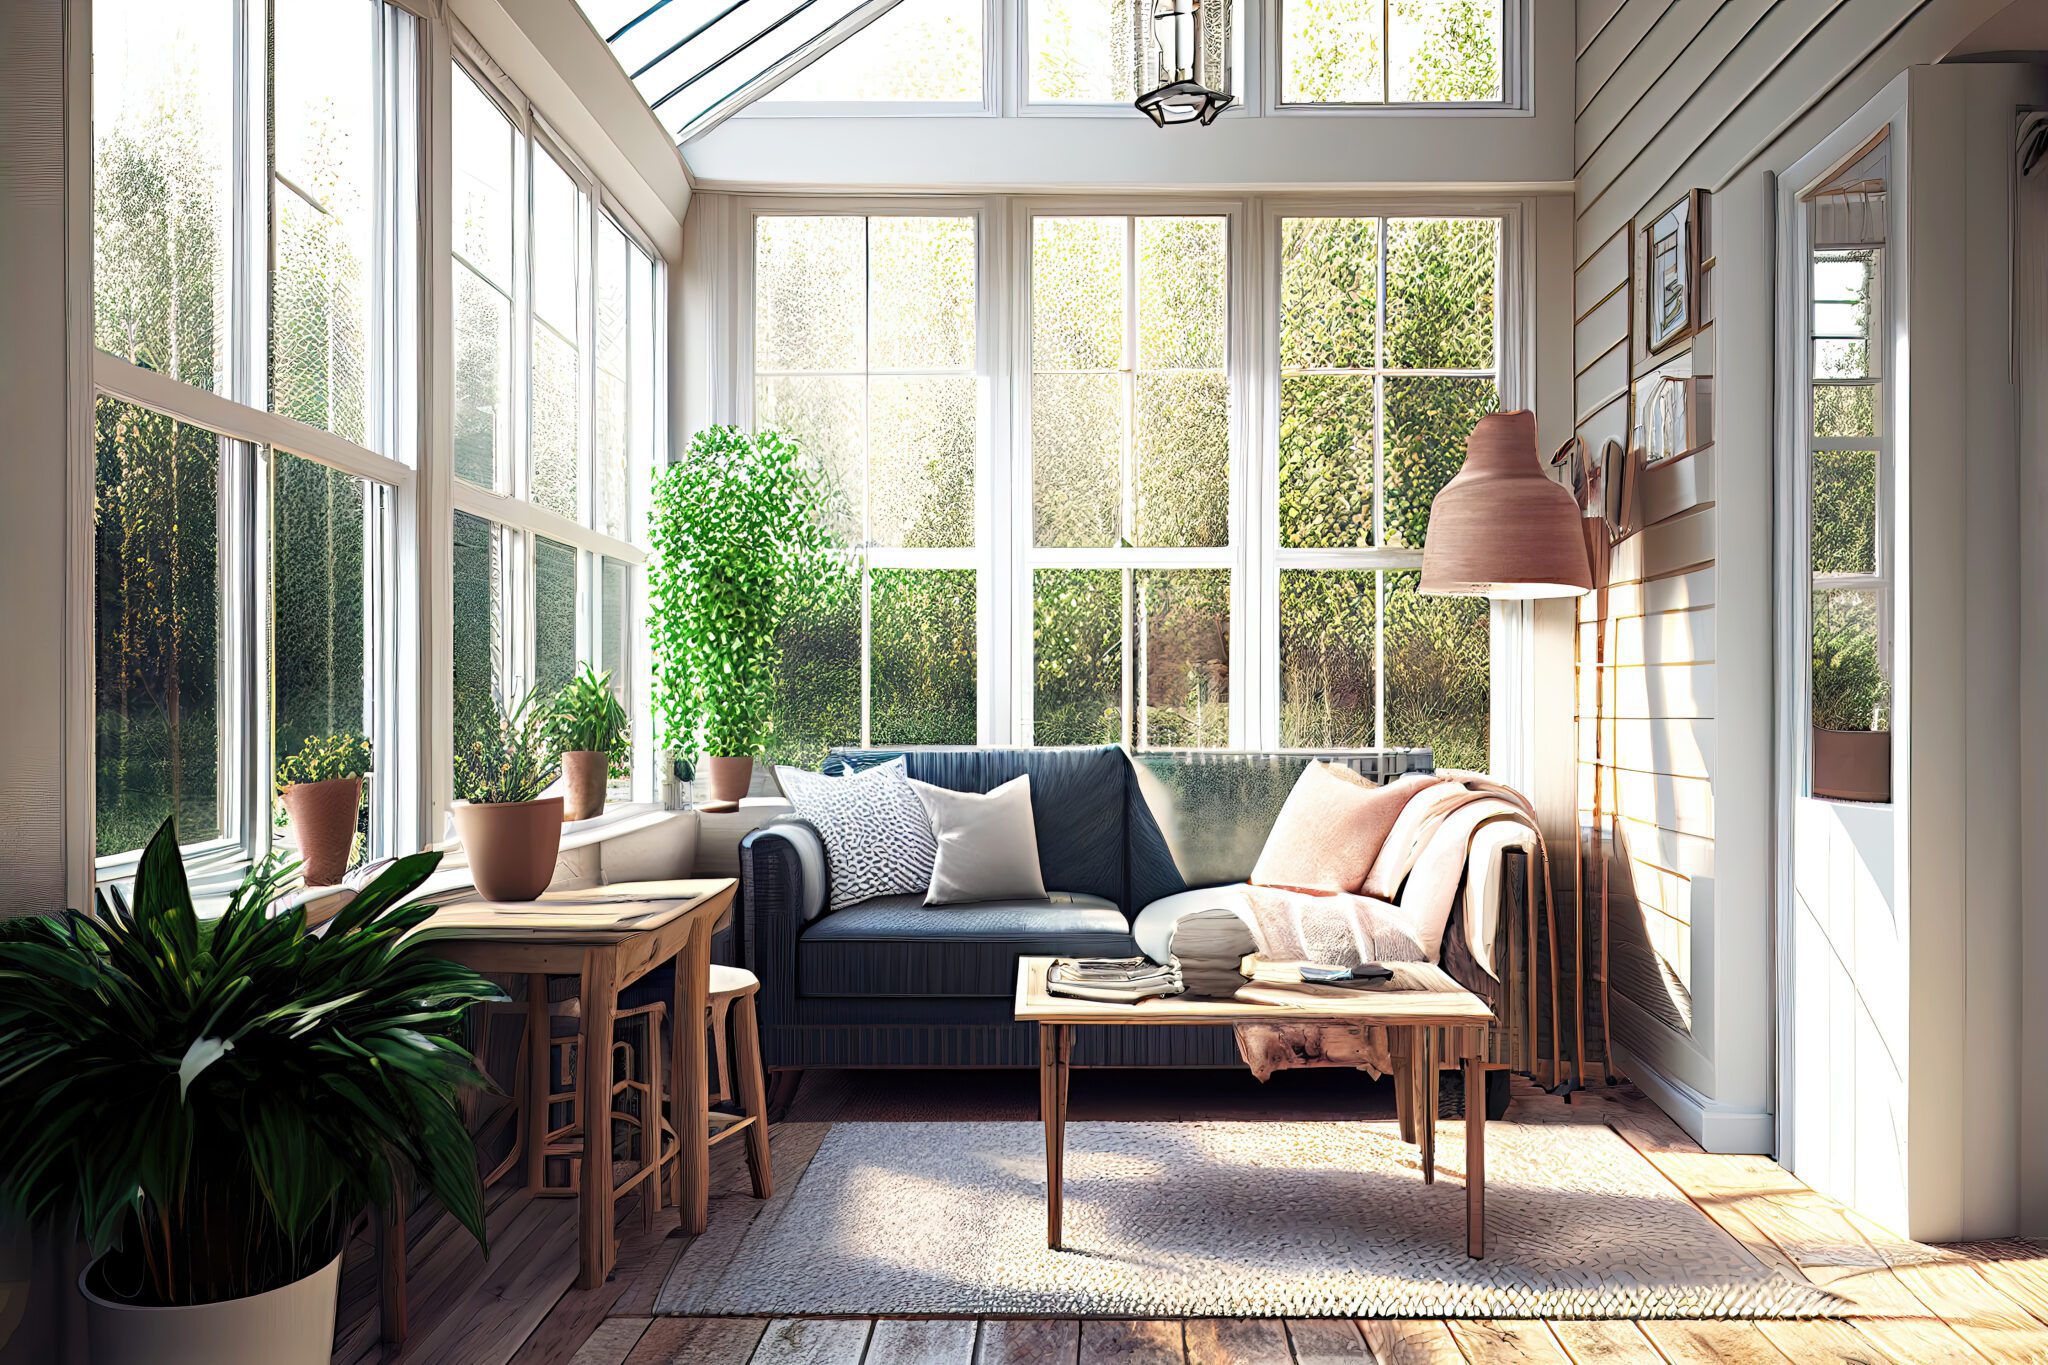 Sunroom with paned windows, coffee table, and blue sofa